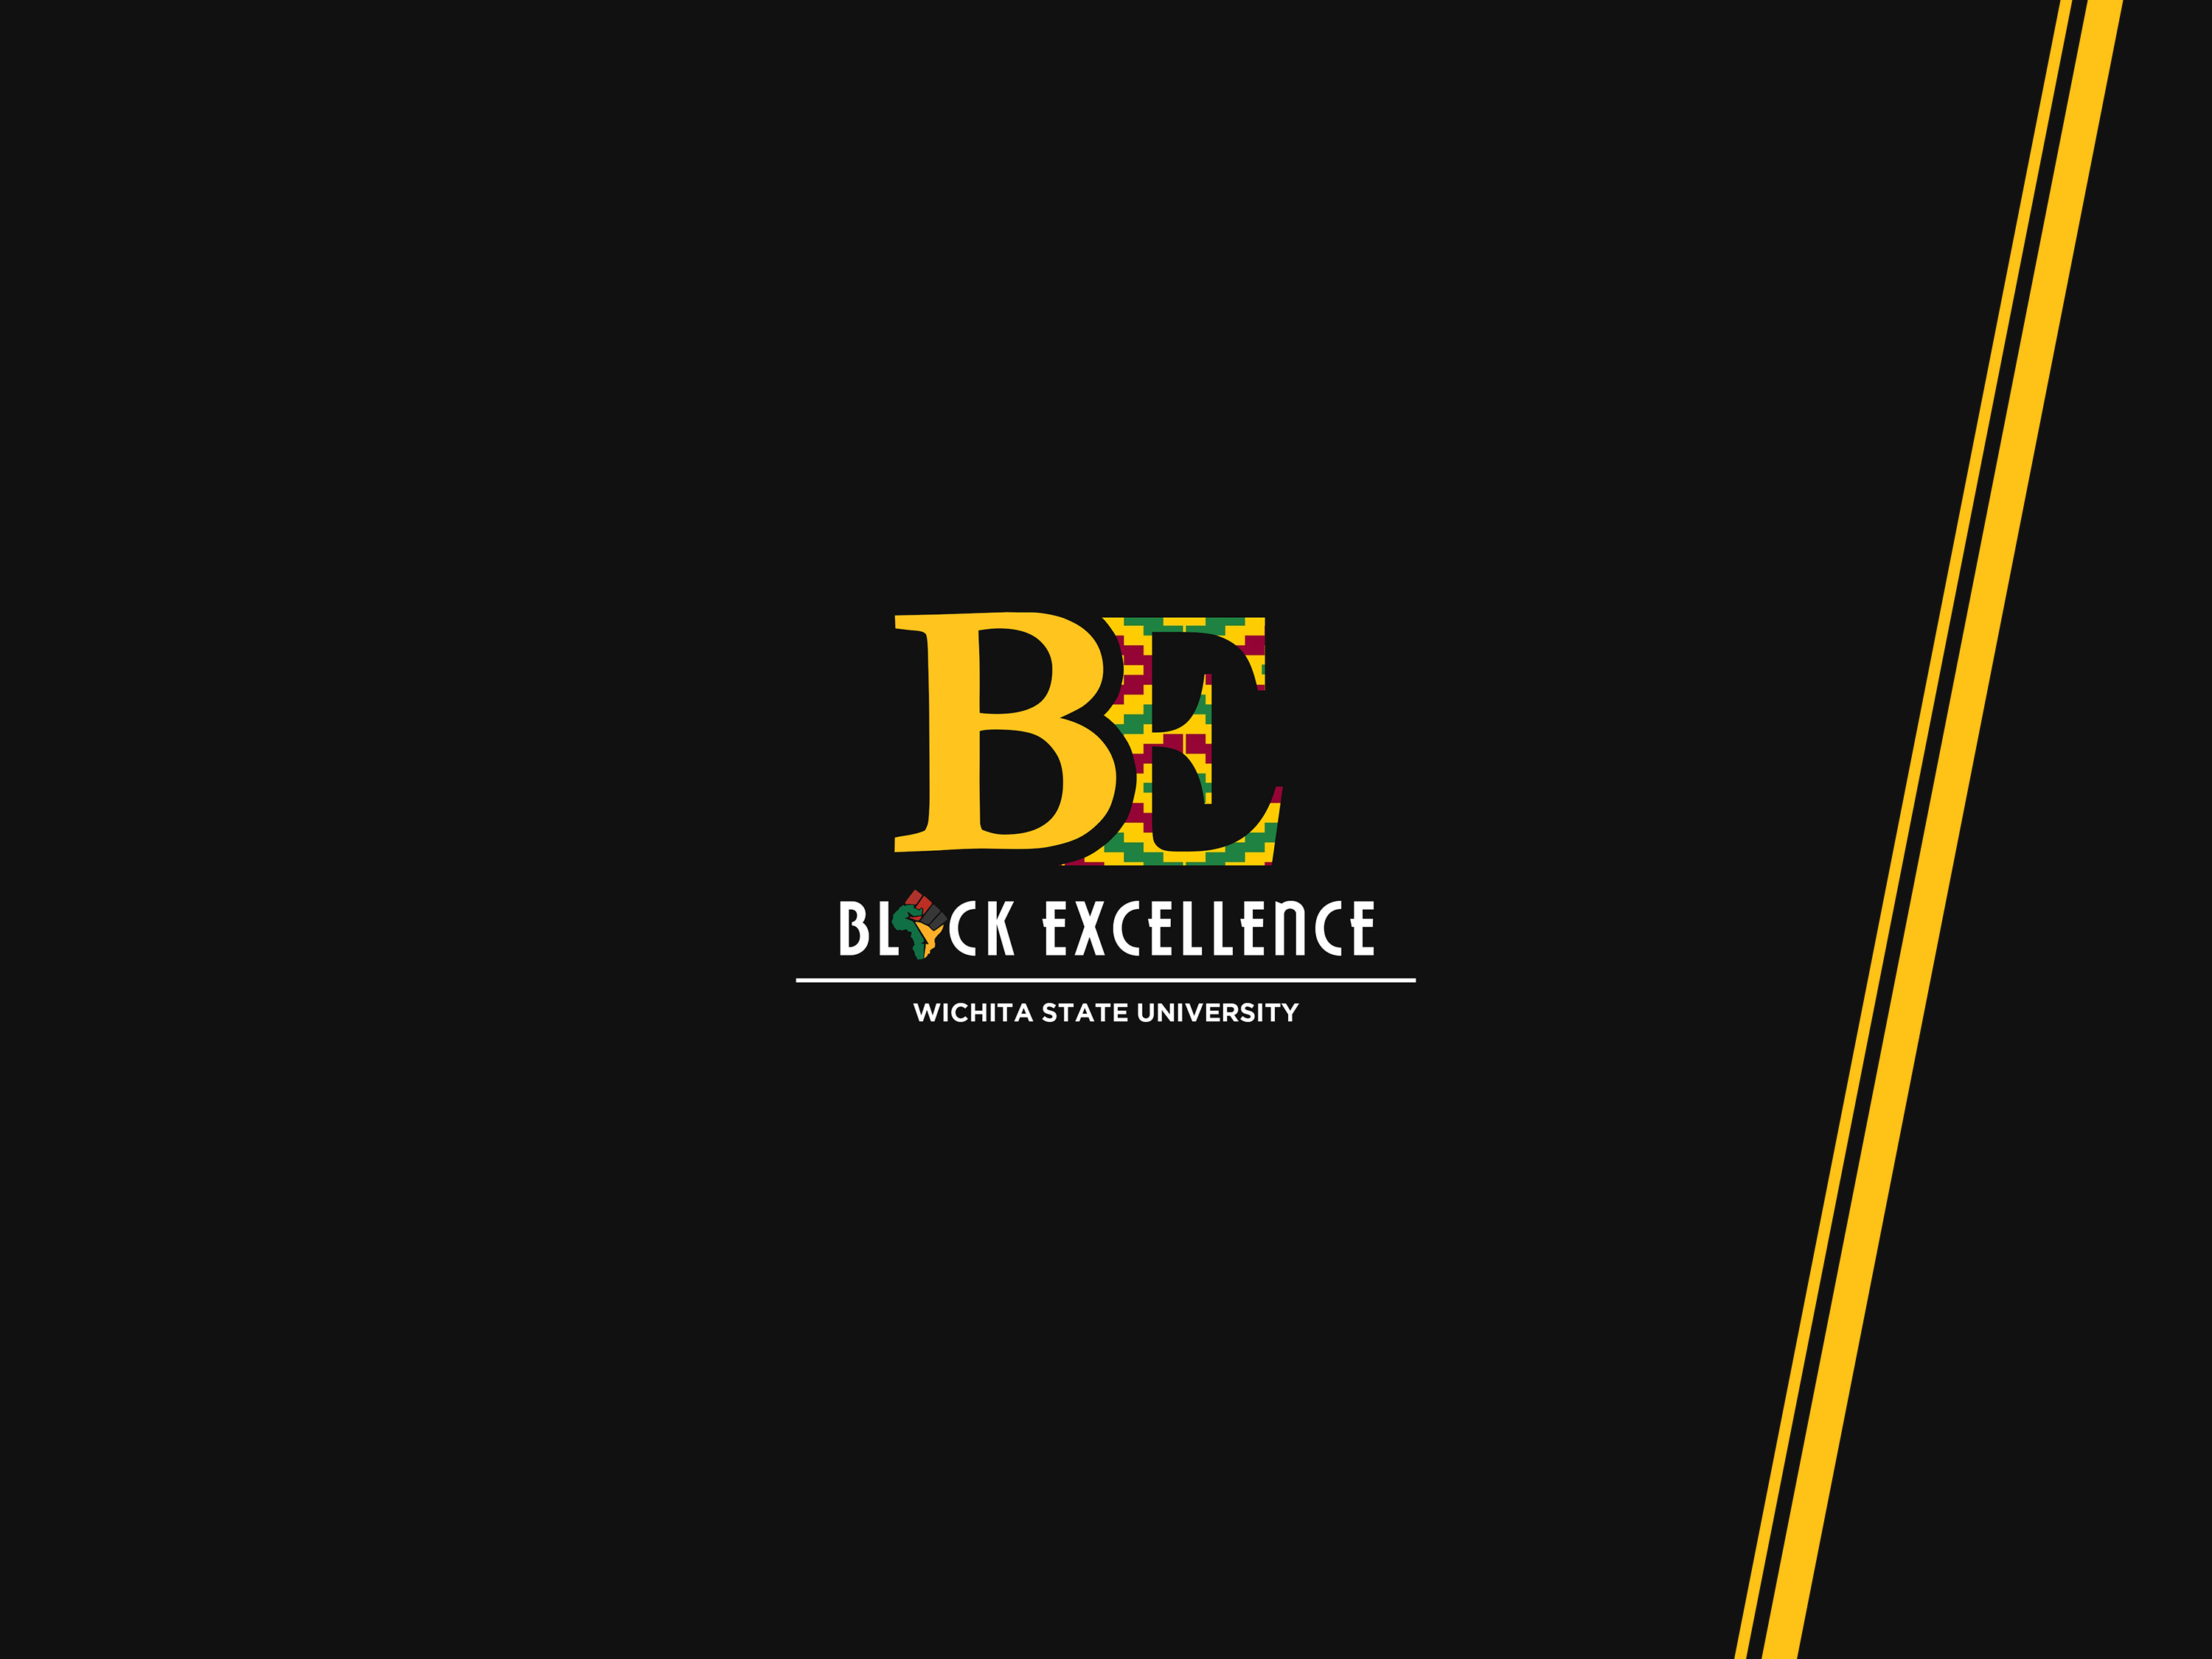 Black Excellence - Wichita State University